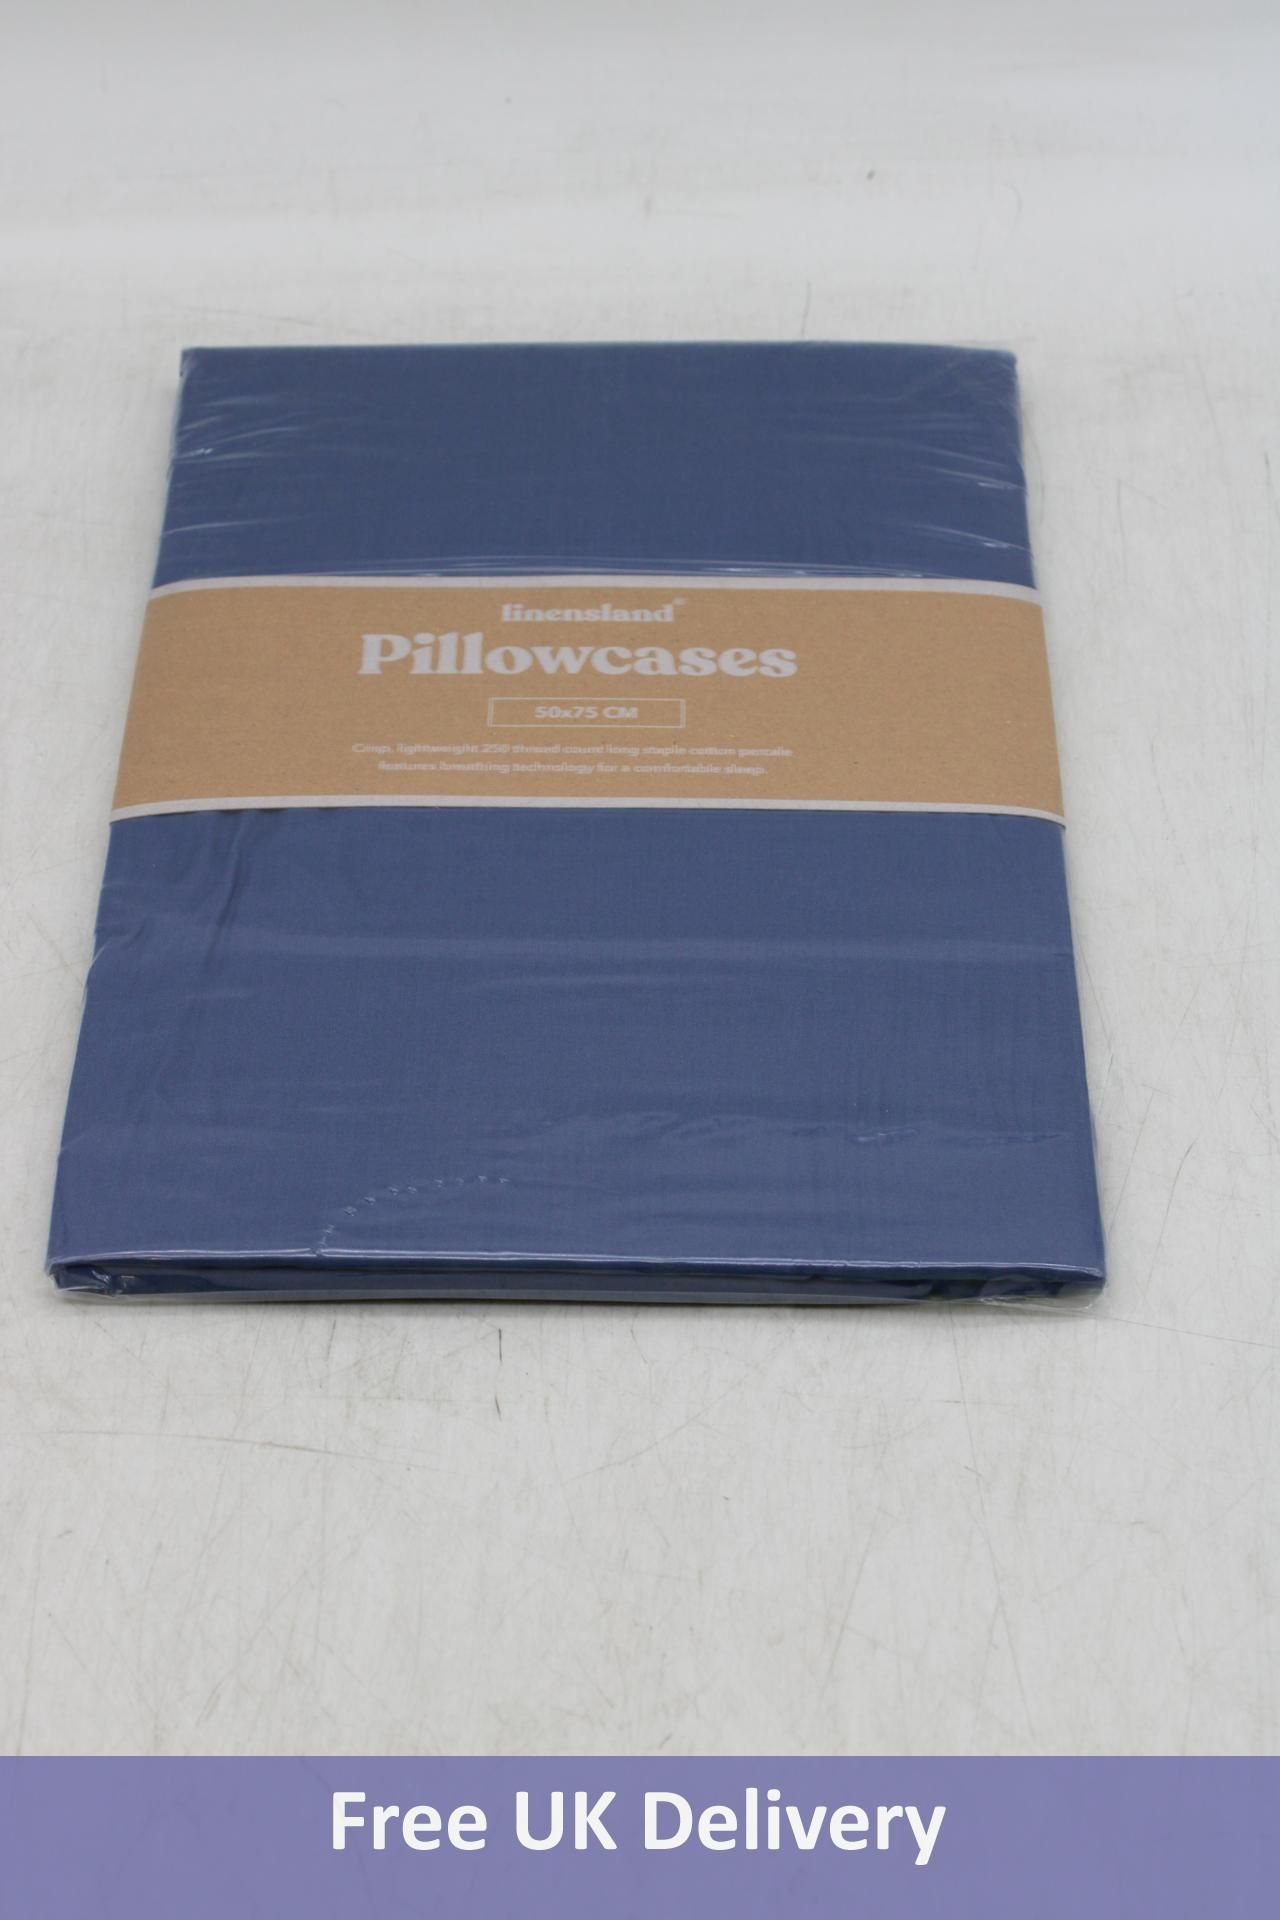 Twenty-five packs of Linensland Pillowcase, Navy, 50 x 75 cm, 4 per pack - Image 3 of 5